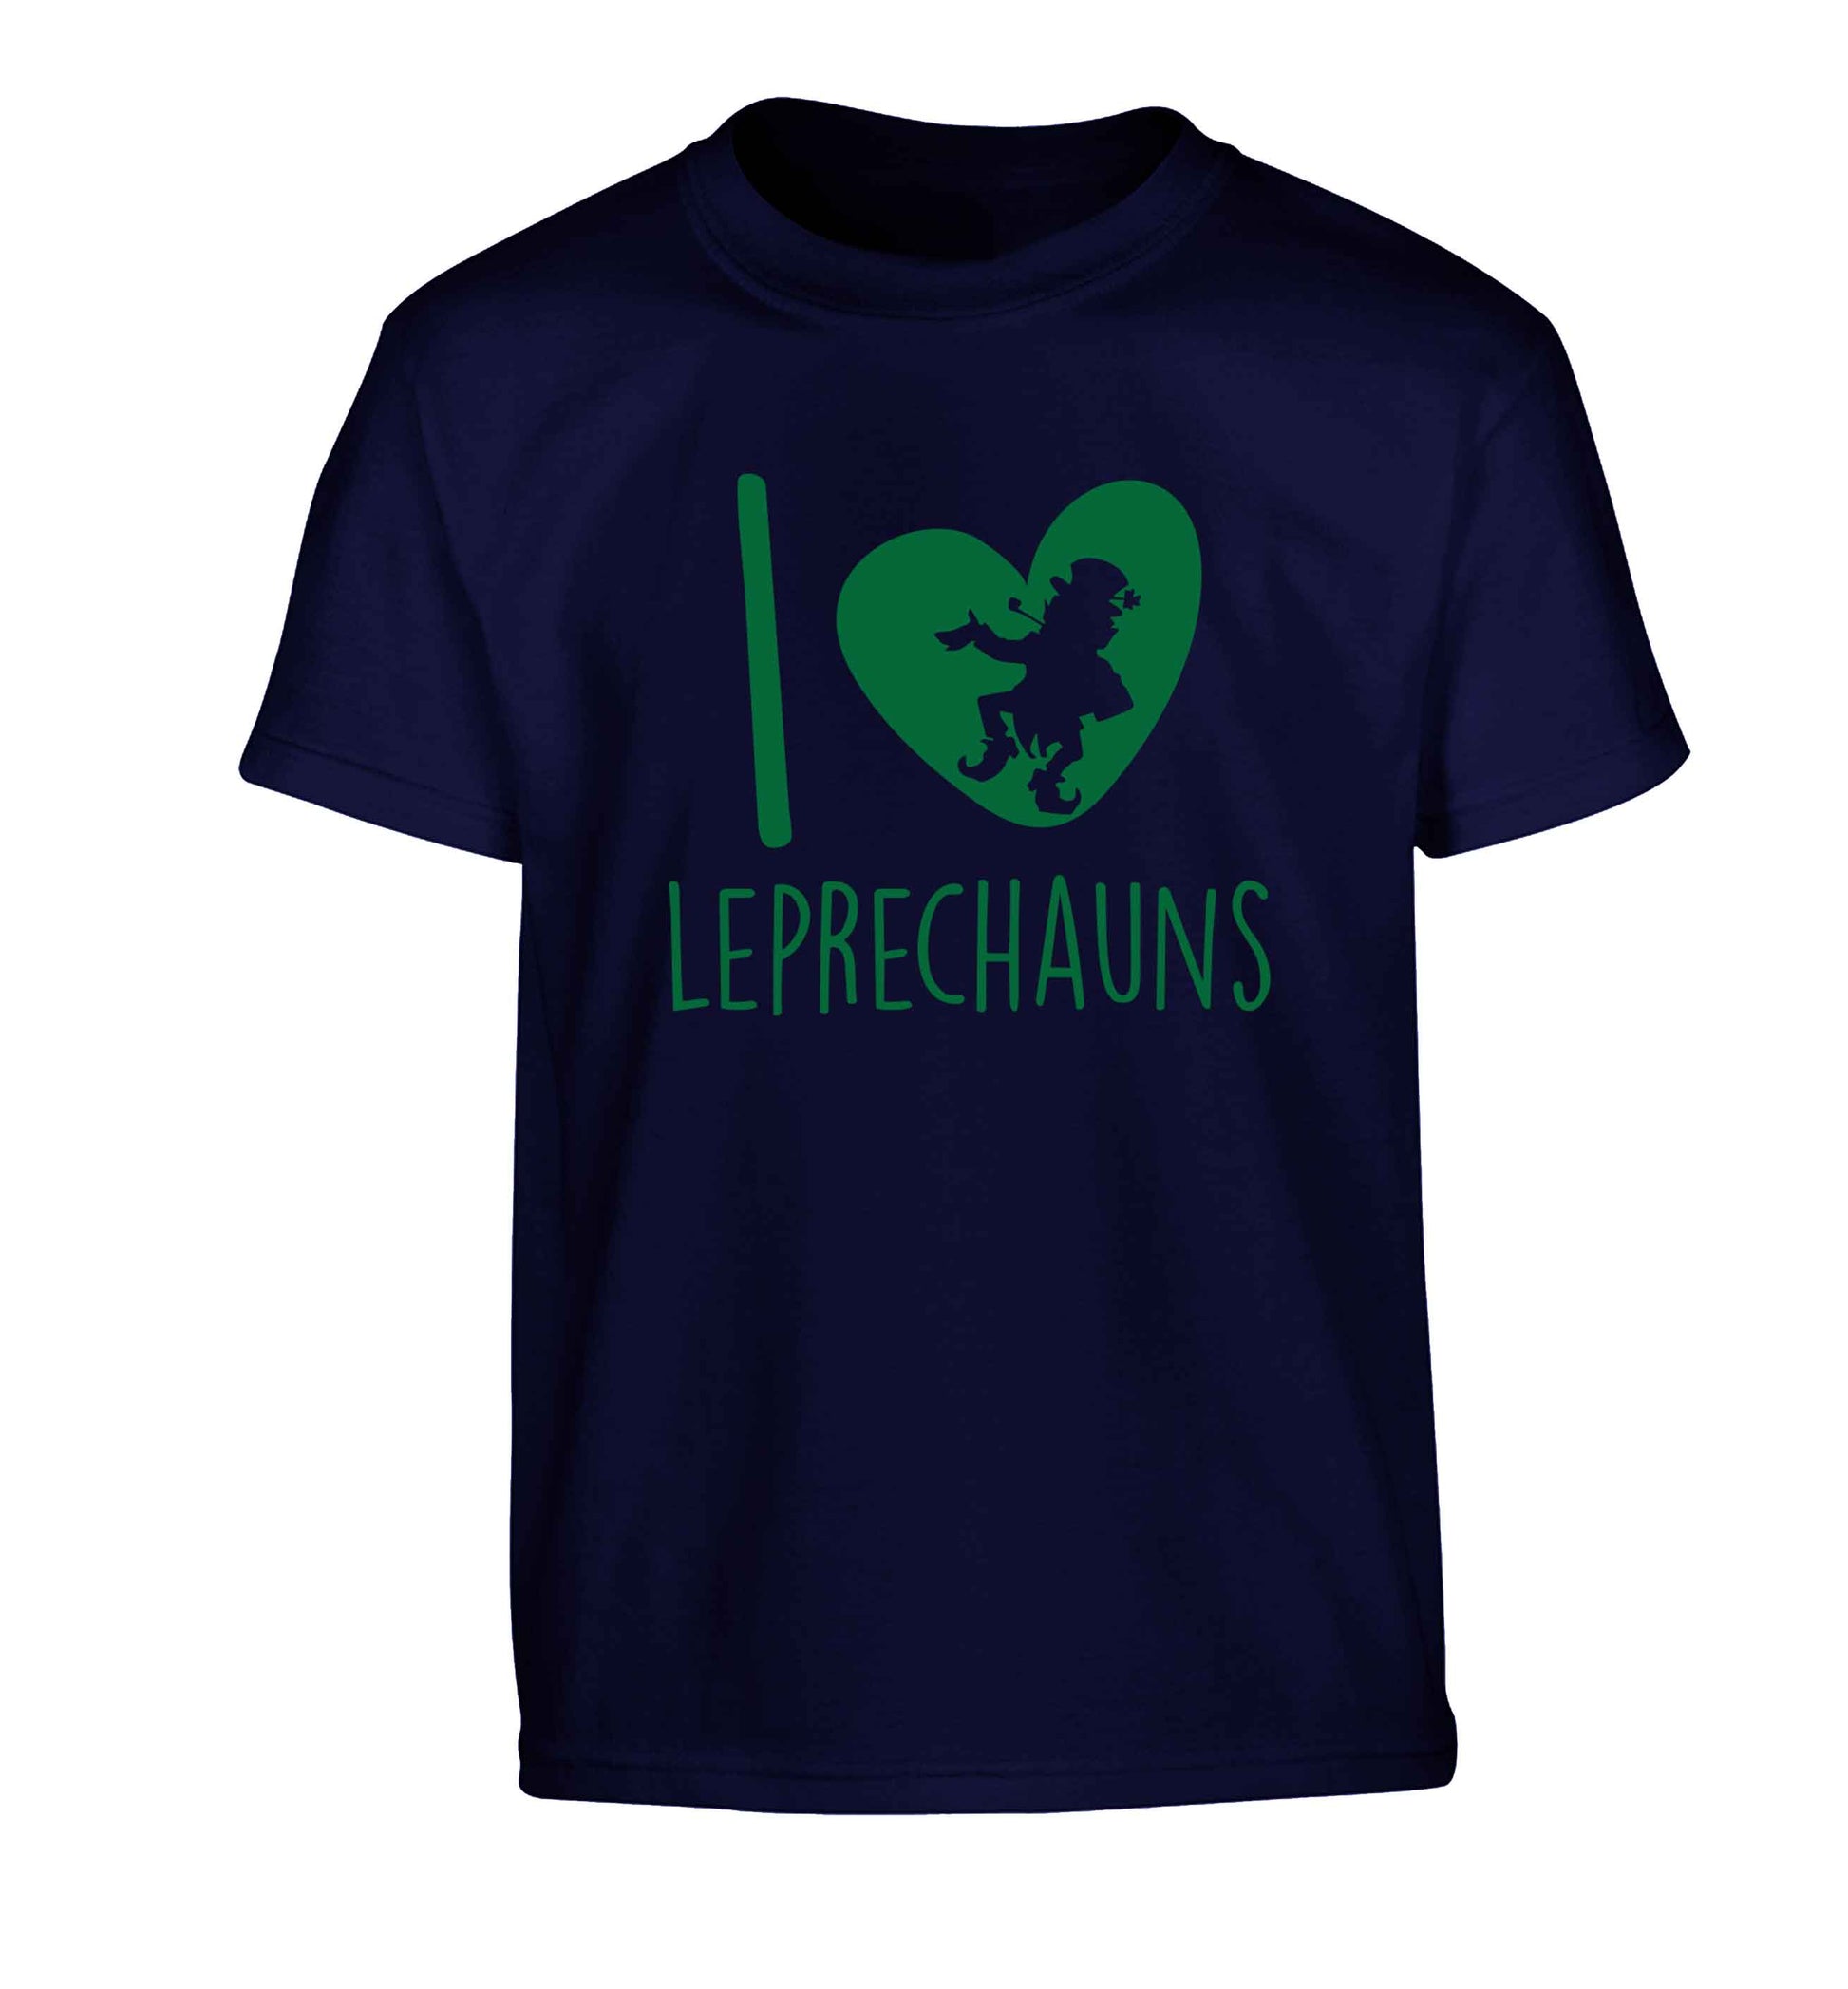 I love leprechauns Children's navy Tshirt 12-13 Years